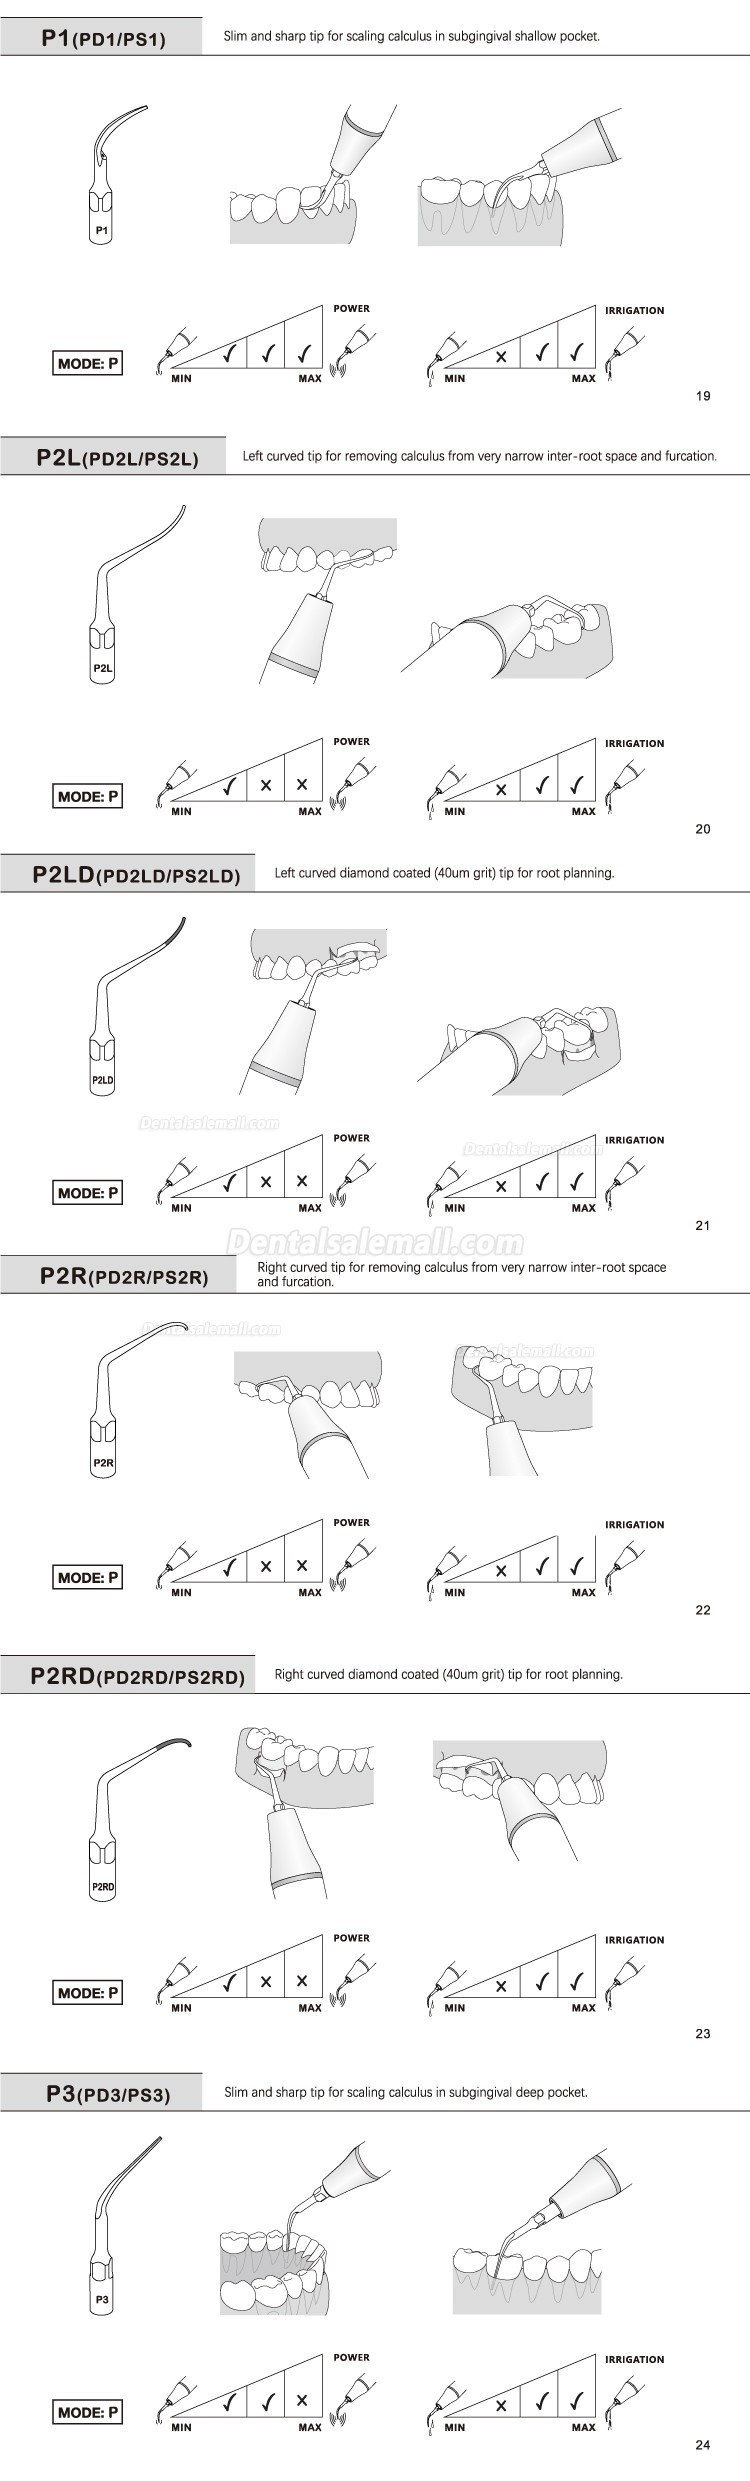 5Pcs Dental Tips P2L P2R P2LD P2RD P5 P6 P7 P8 P10 P11 P12 P14L Fit For Refine EMS Woodpecker Scaler Handpiece